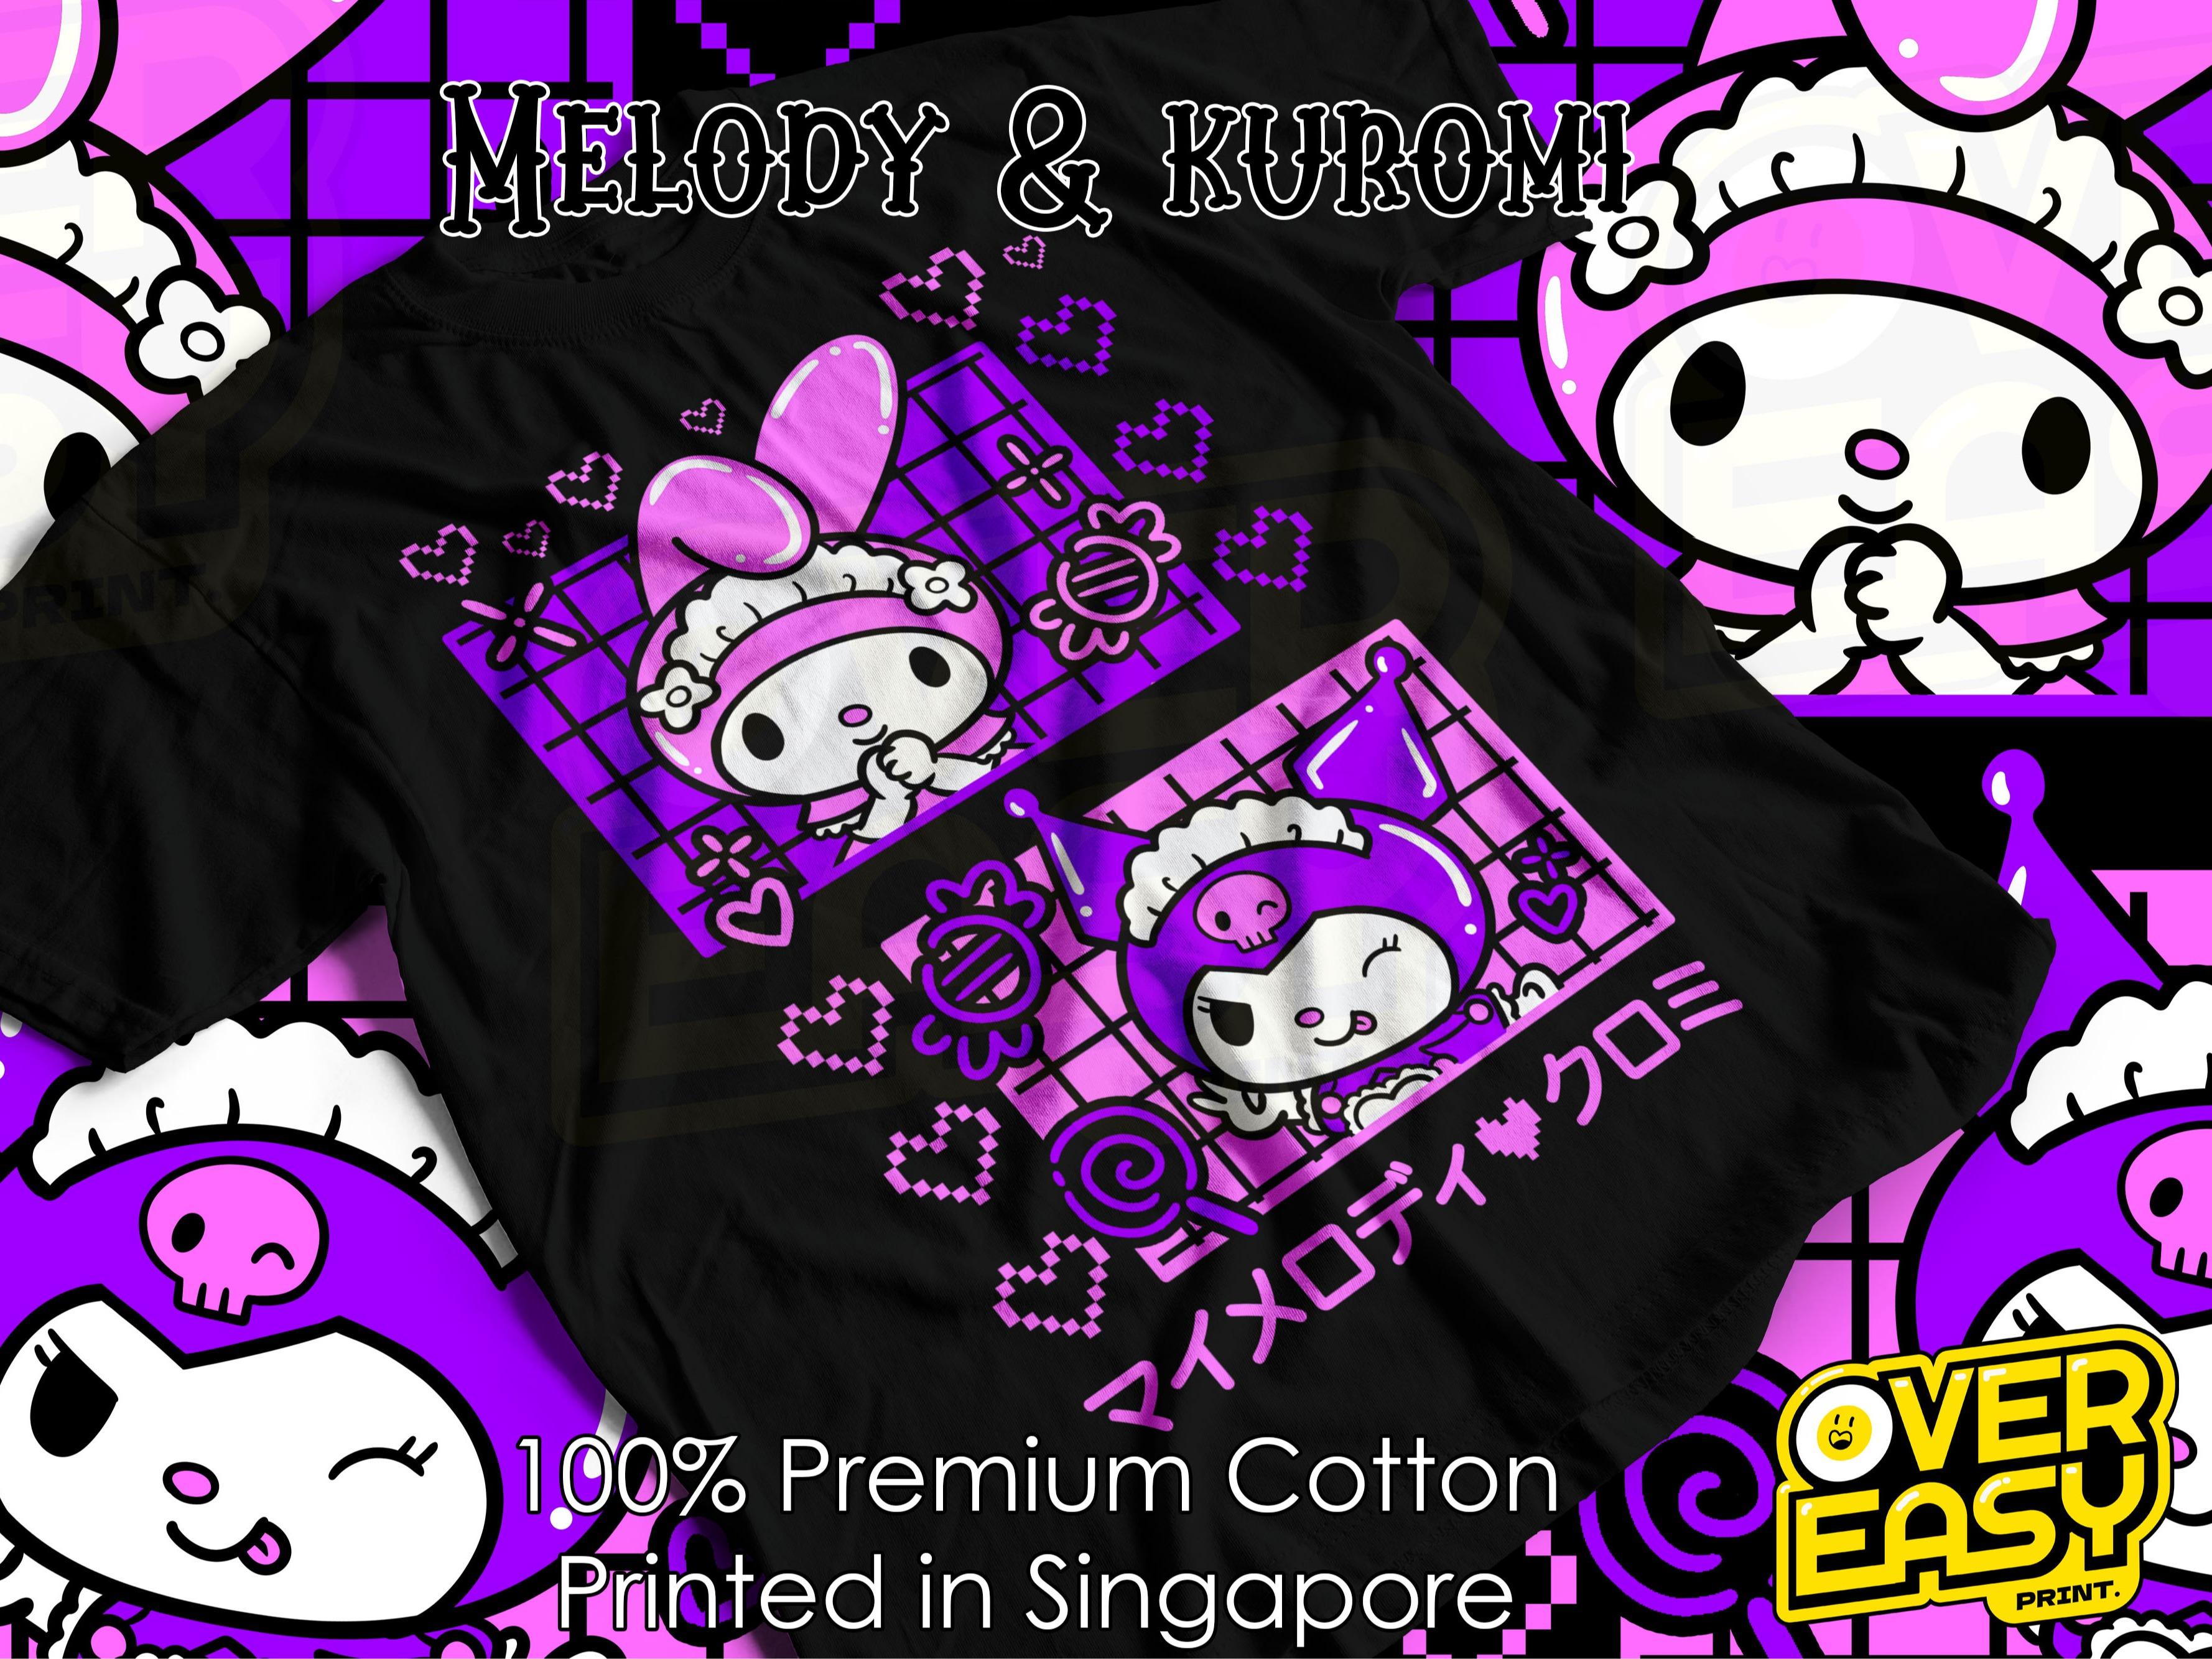 Melody & Kuromi FANART Anime T-Shirt